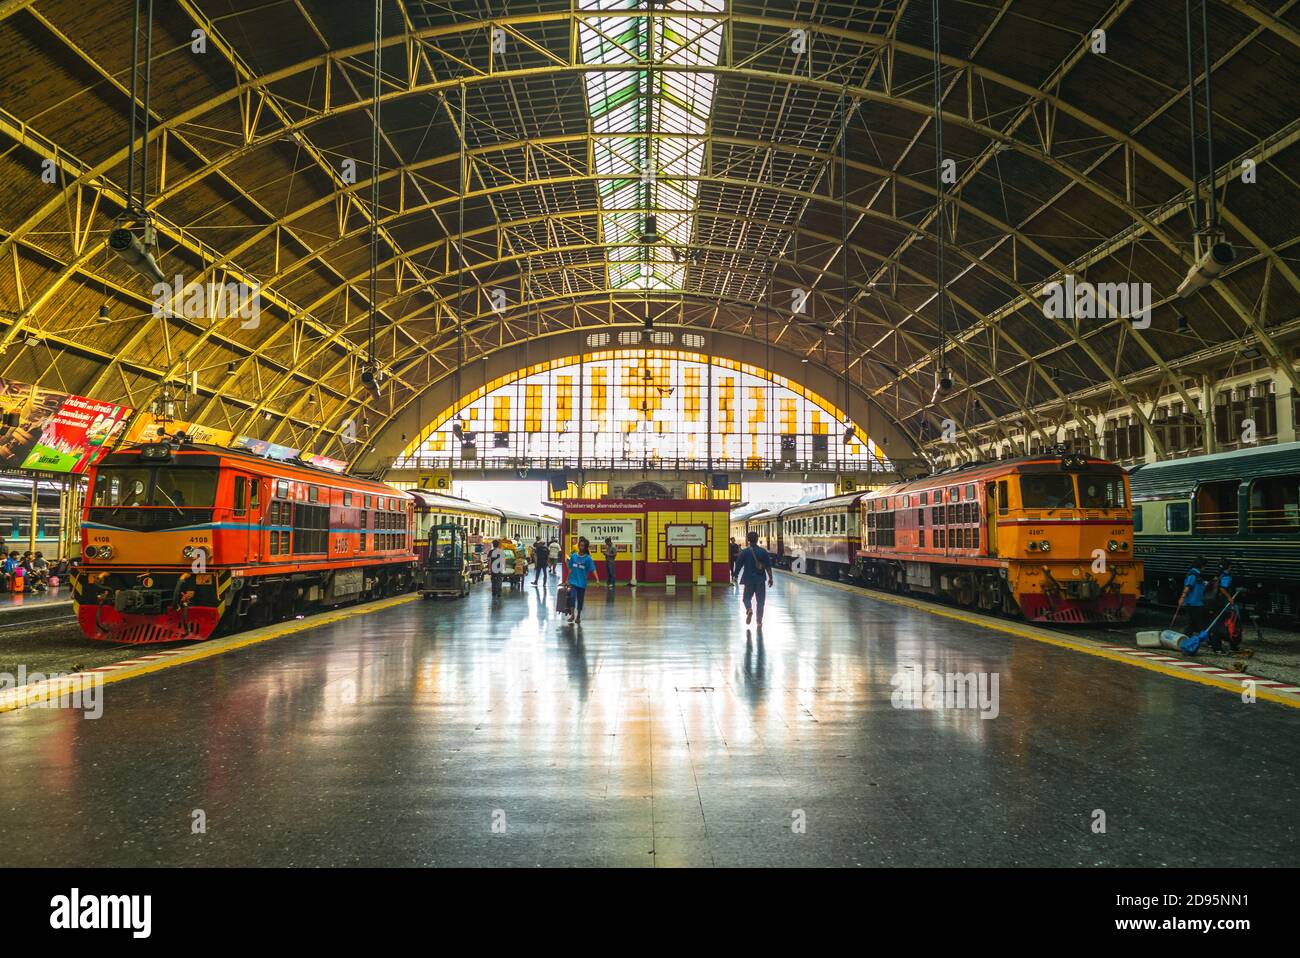 17 septembre 2019 : la gare ferroviaire de Bangkok, alias la gare de hua lamphong, est la principale gare ferroviaire de bangkok, en thaïlande. Il a été ouvert le 25 juin 19 Banque D'Images